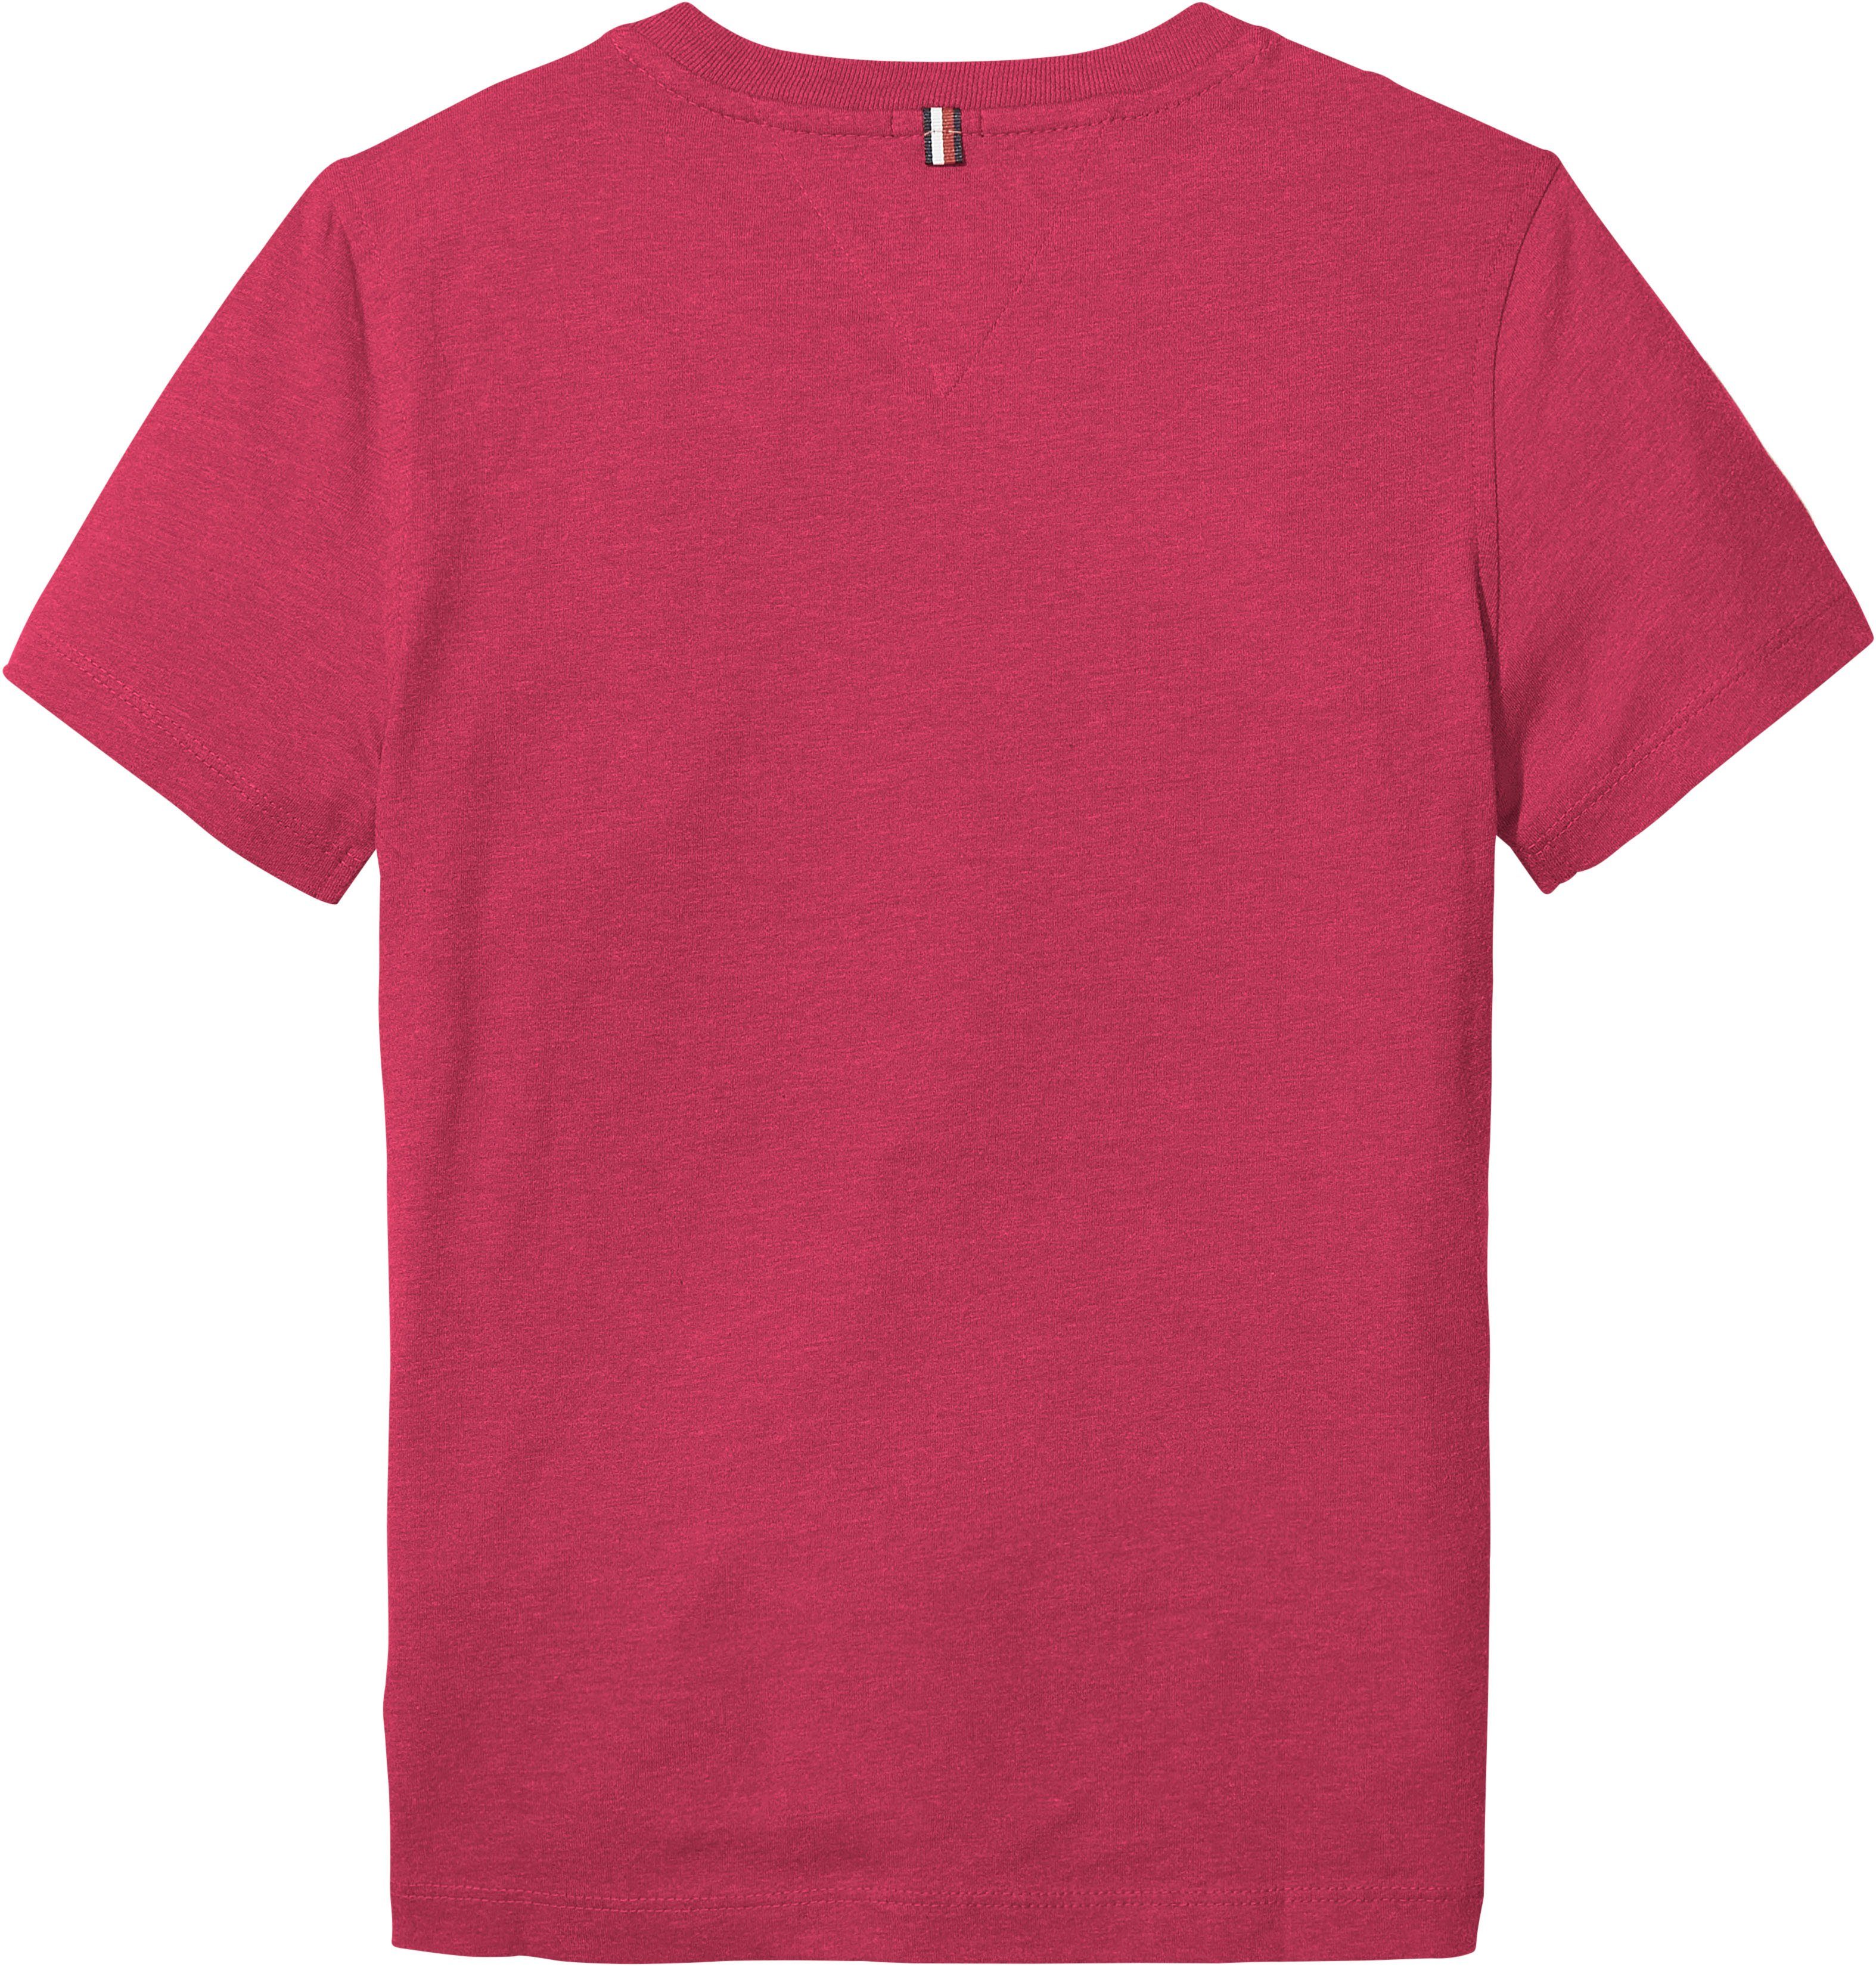 BASIC CN Tommy Hilfiger KNIT T-Shirt BOYS